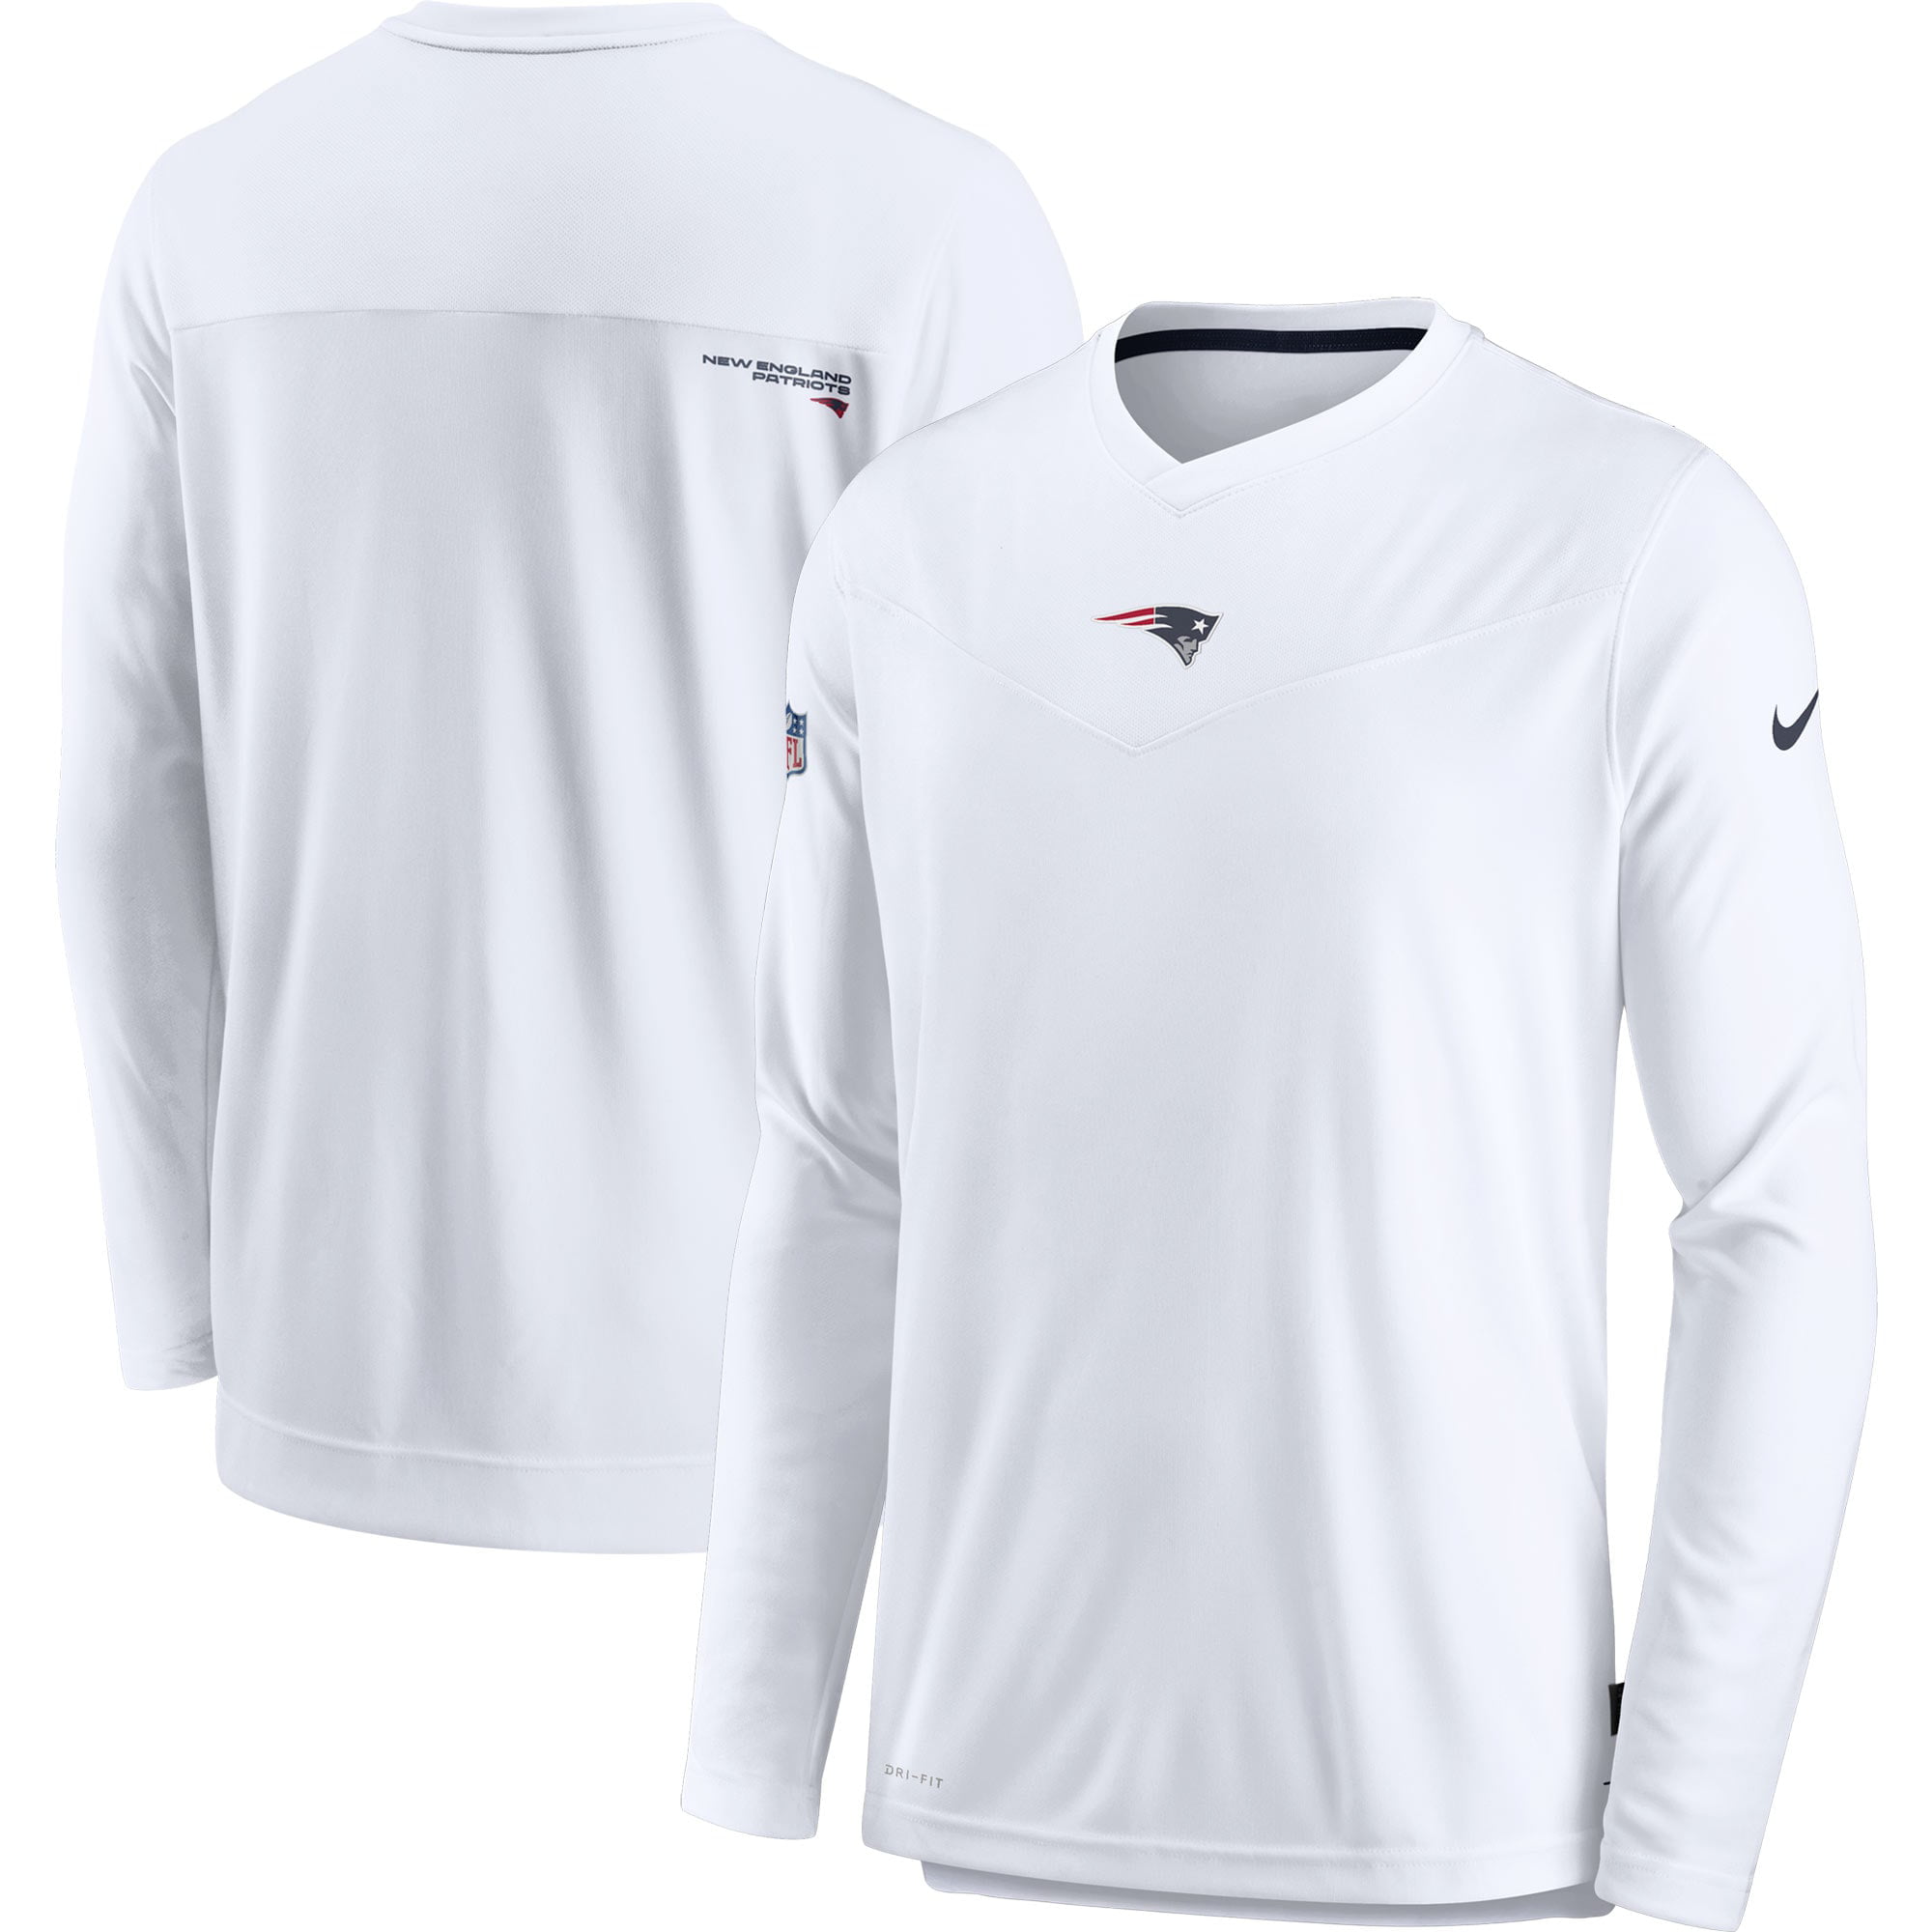 Majestic New England Patriots Mens Long Sleeve White Crew Neck T-Shirt 